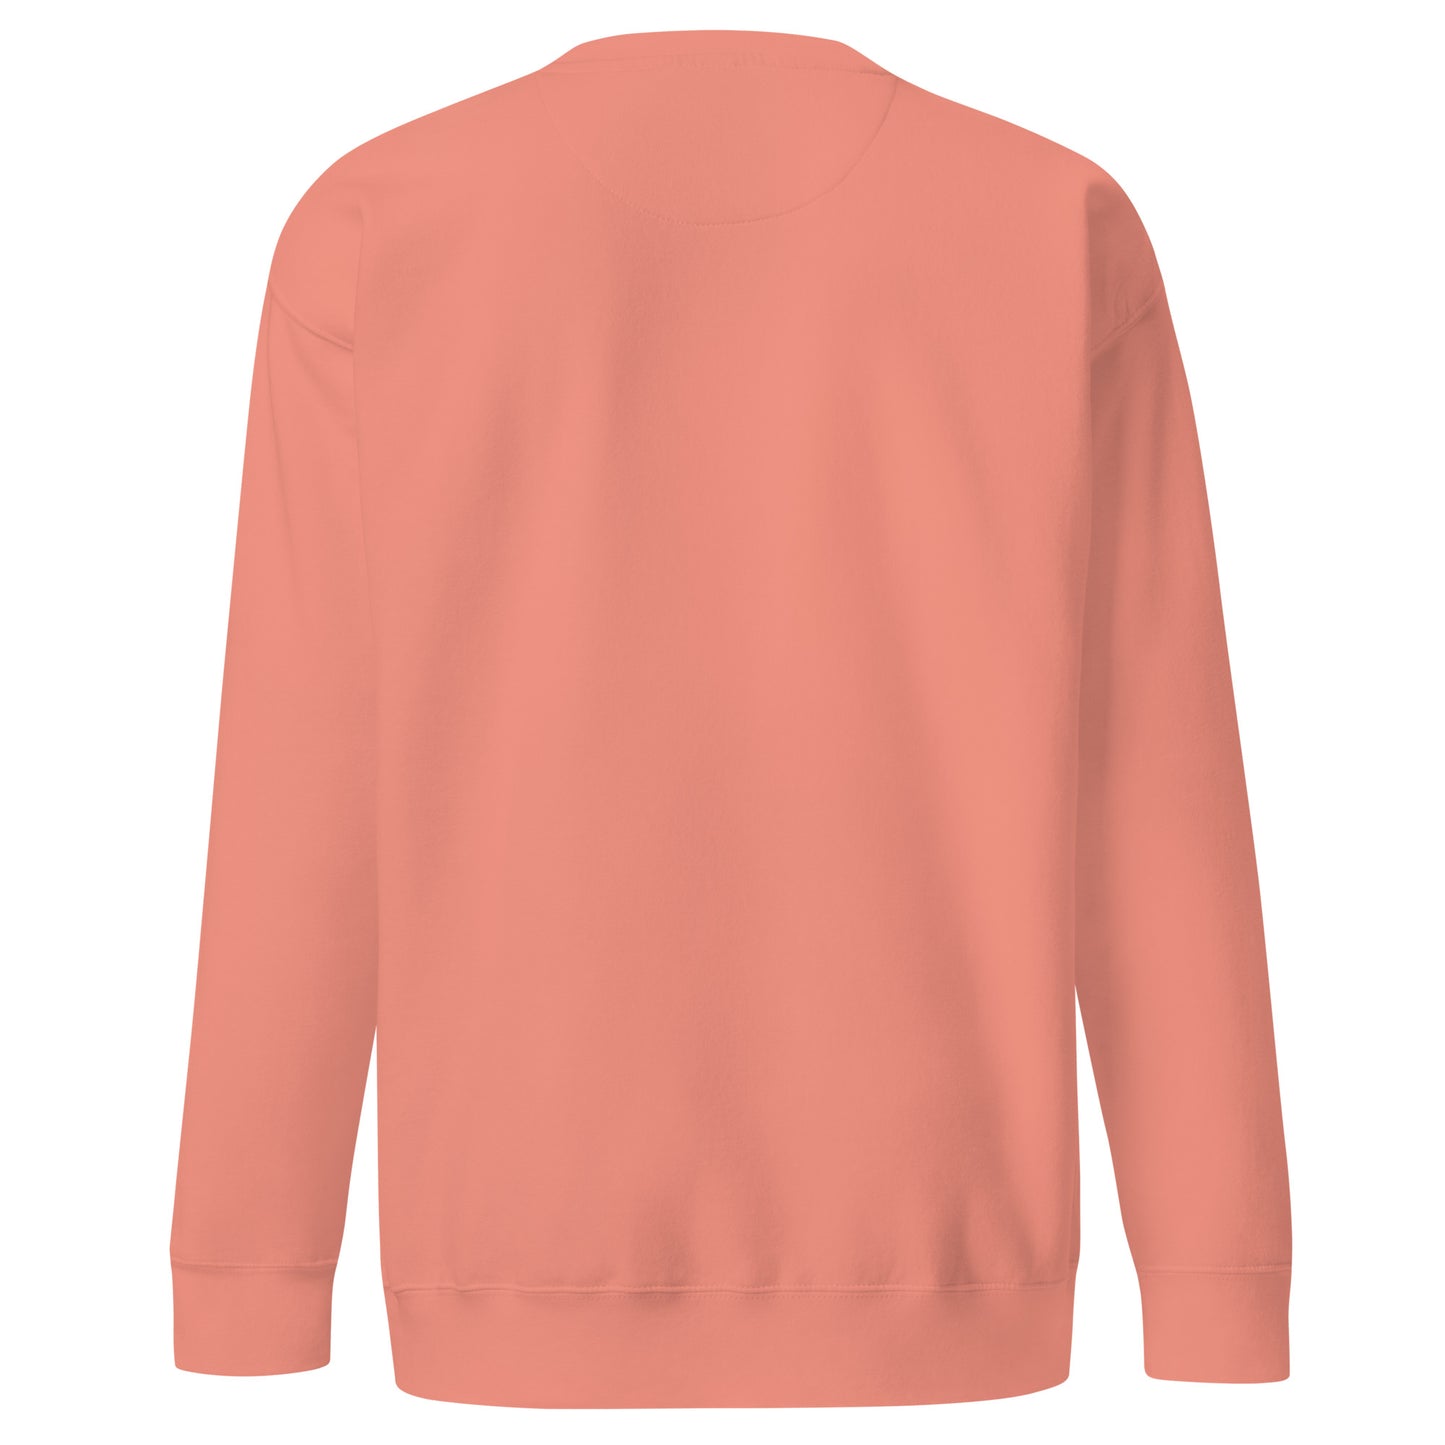 Mokapot - TL - Unisex Premium Sweatshirt